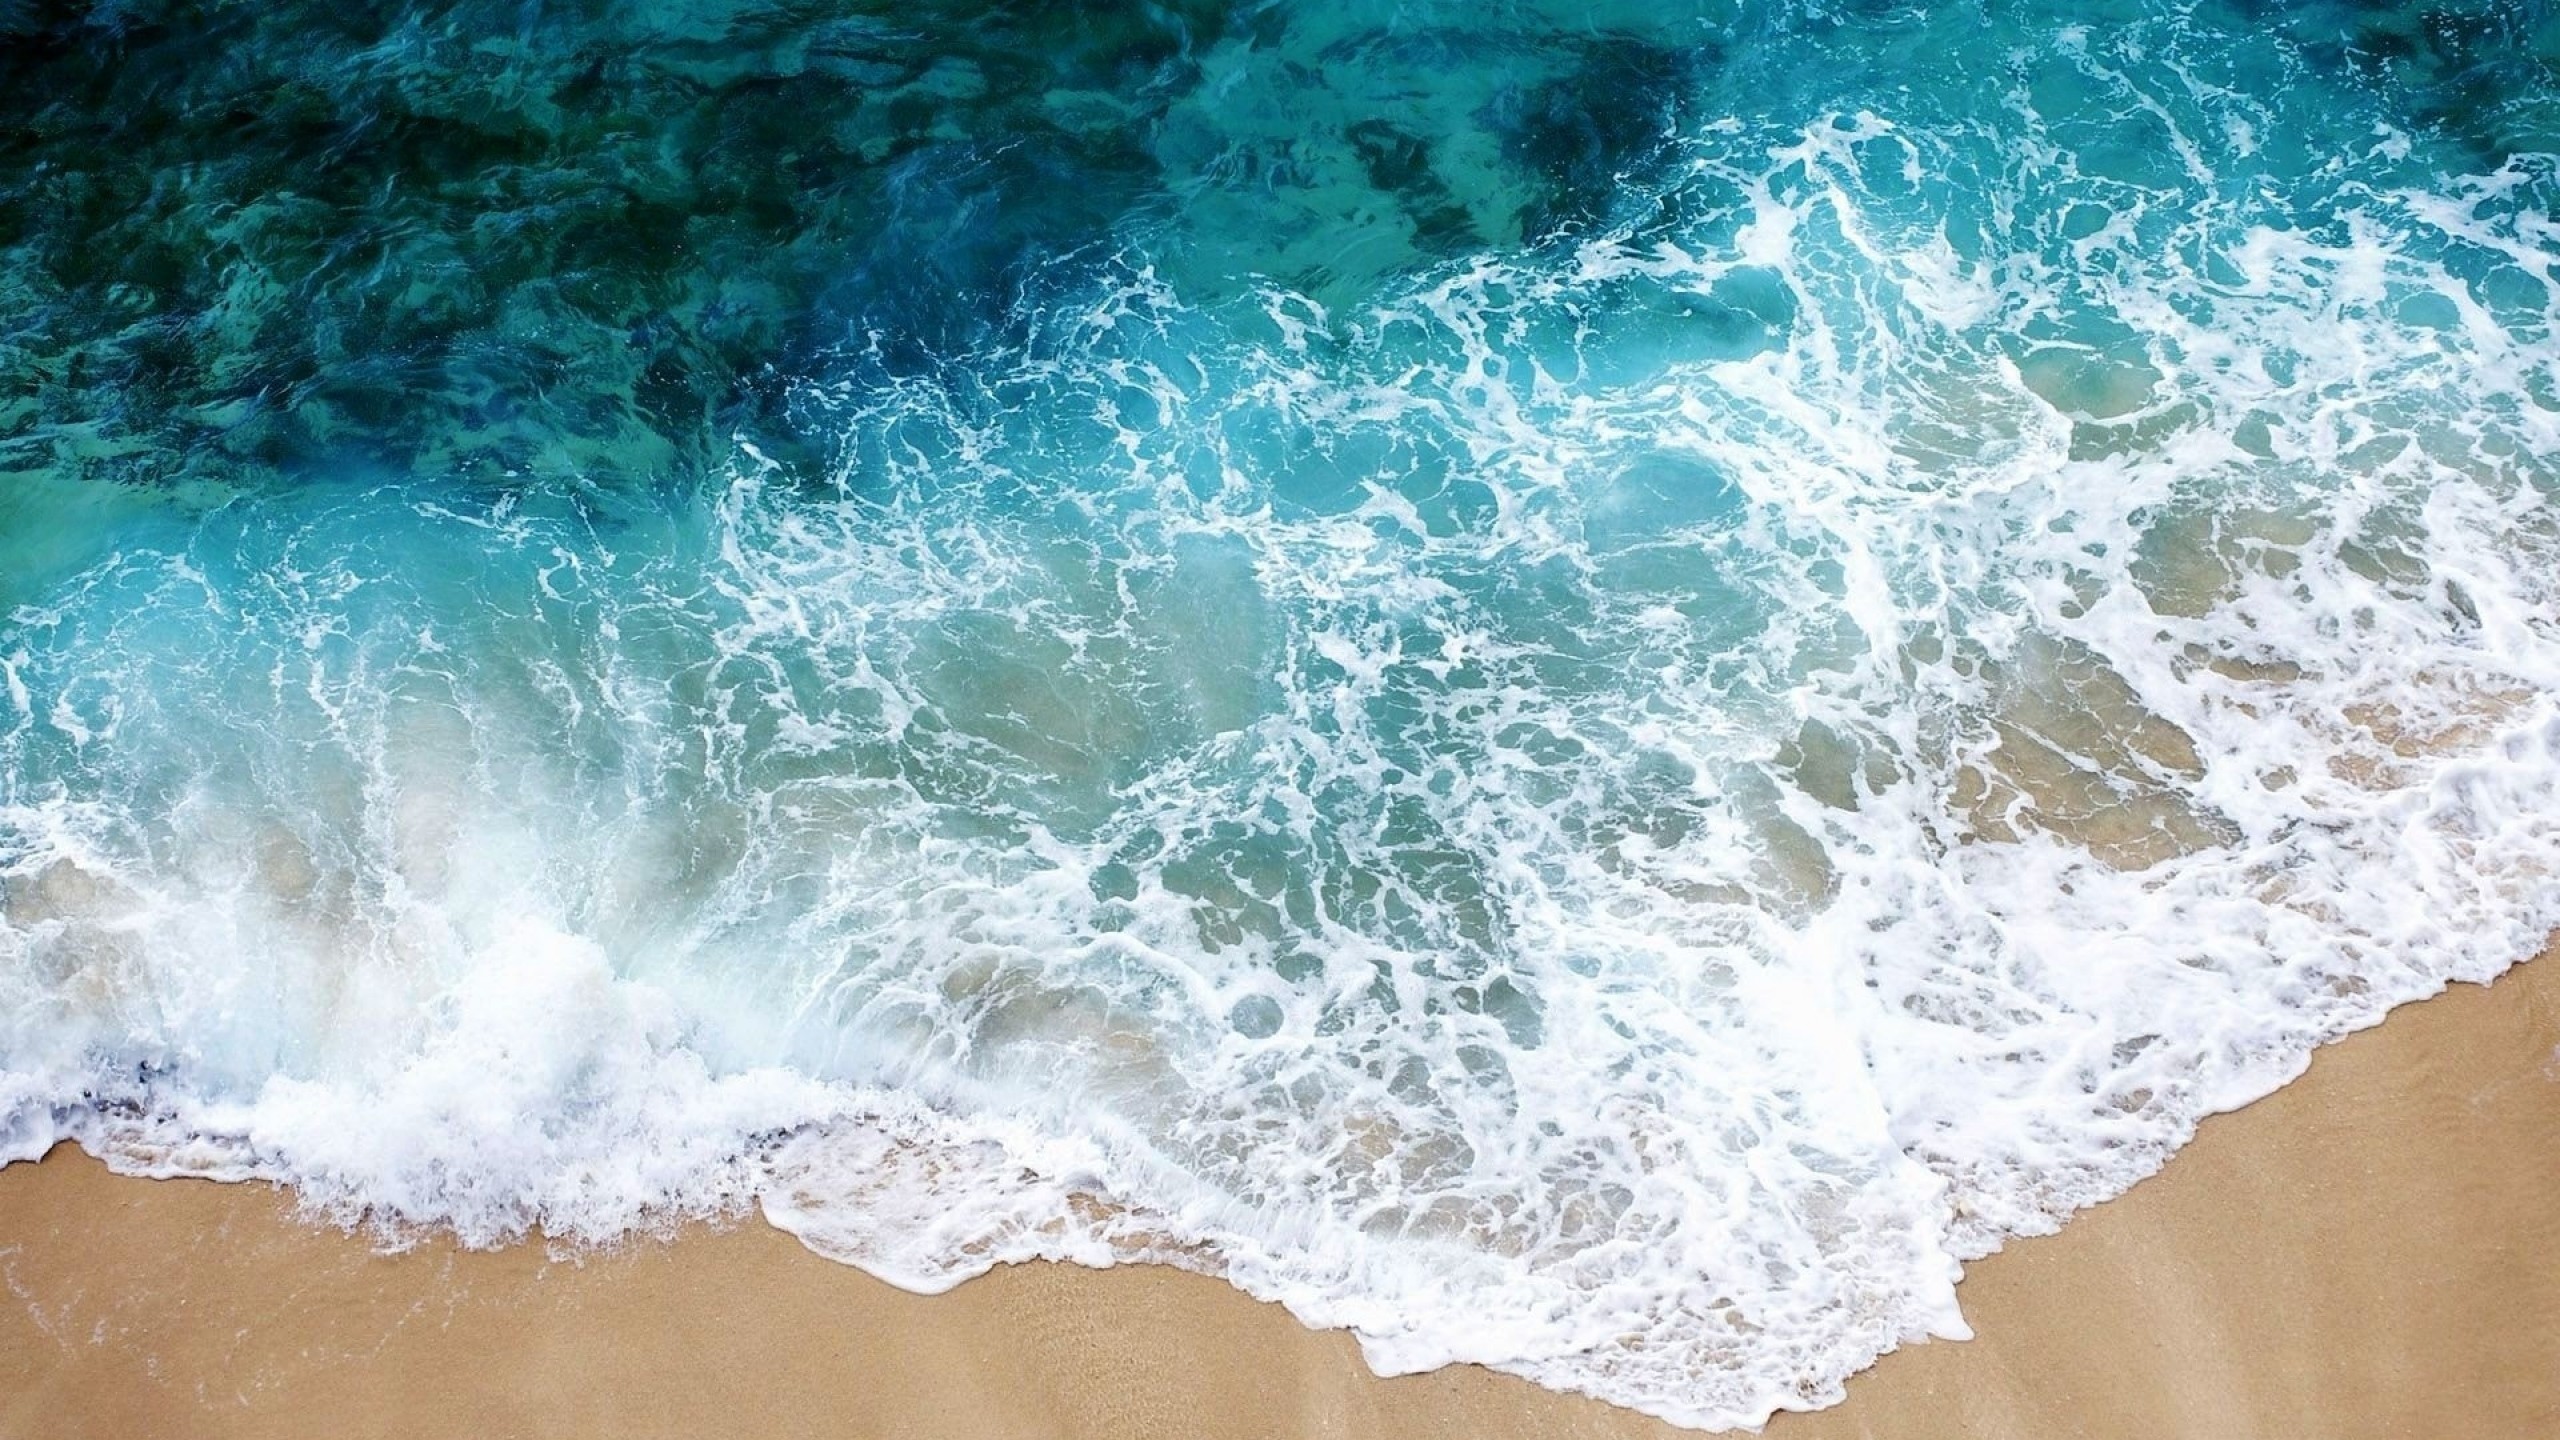 2560x1440 Download  Beach, Sea, Sand, Water, Transparent, Purity, Freshness,  Foam Wallpaper, Background Mac iMac 27